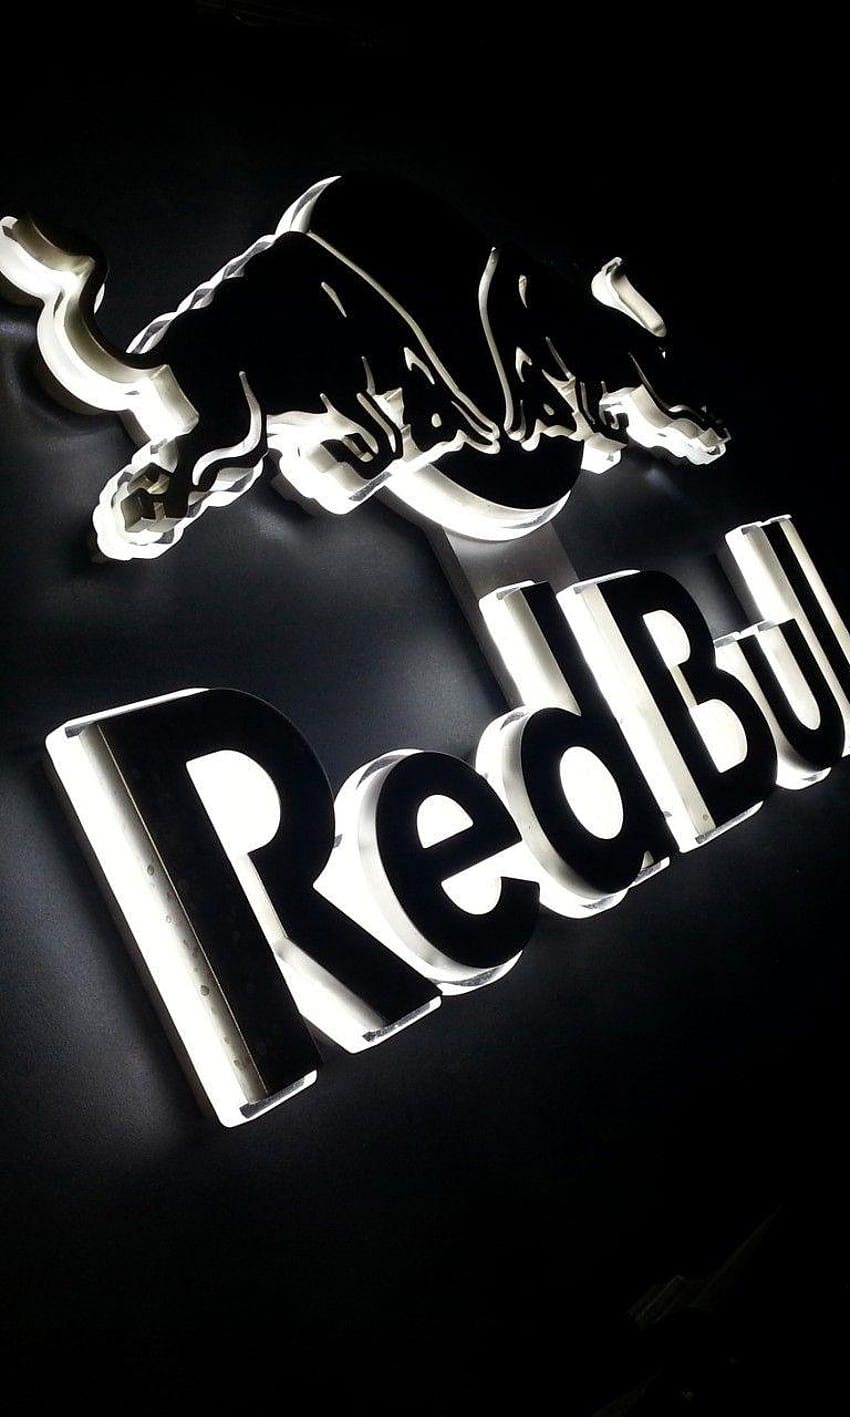 Red Bull, bull mobile HD phone wallpaper